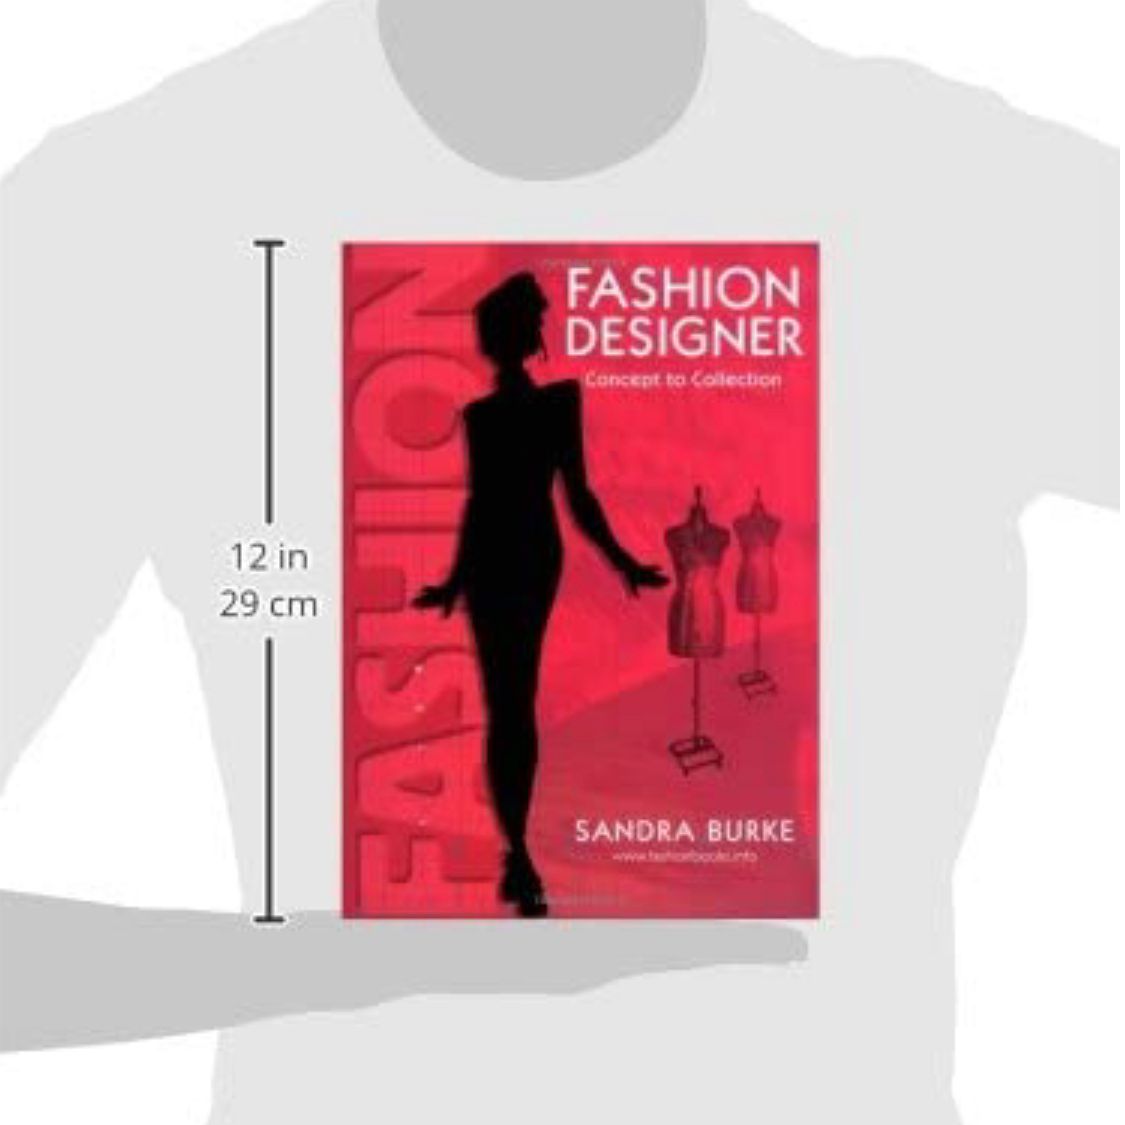 Fashion Designer Concept to Collection Book